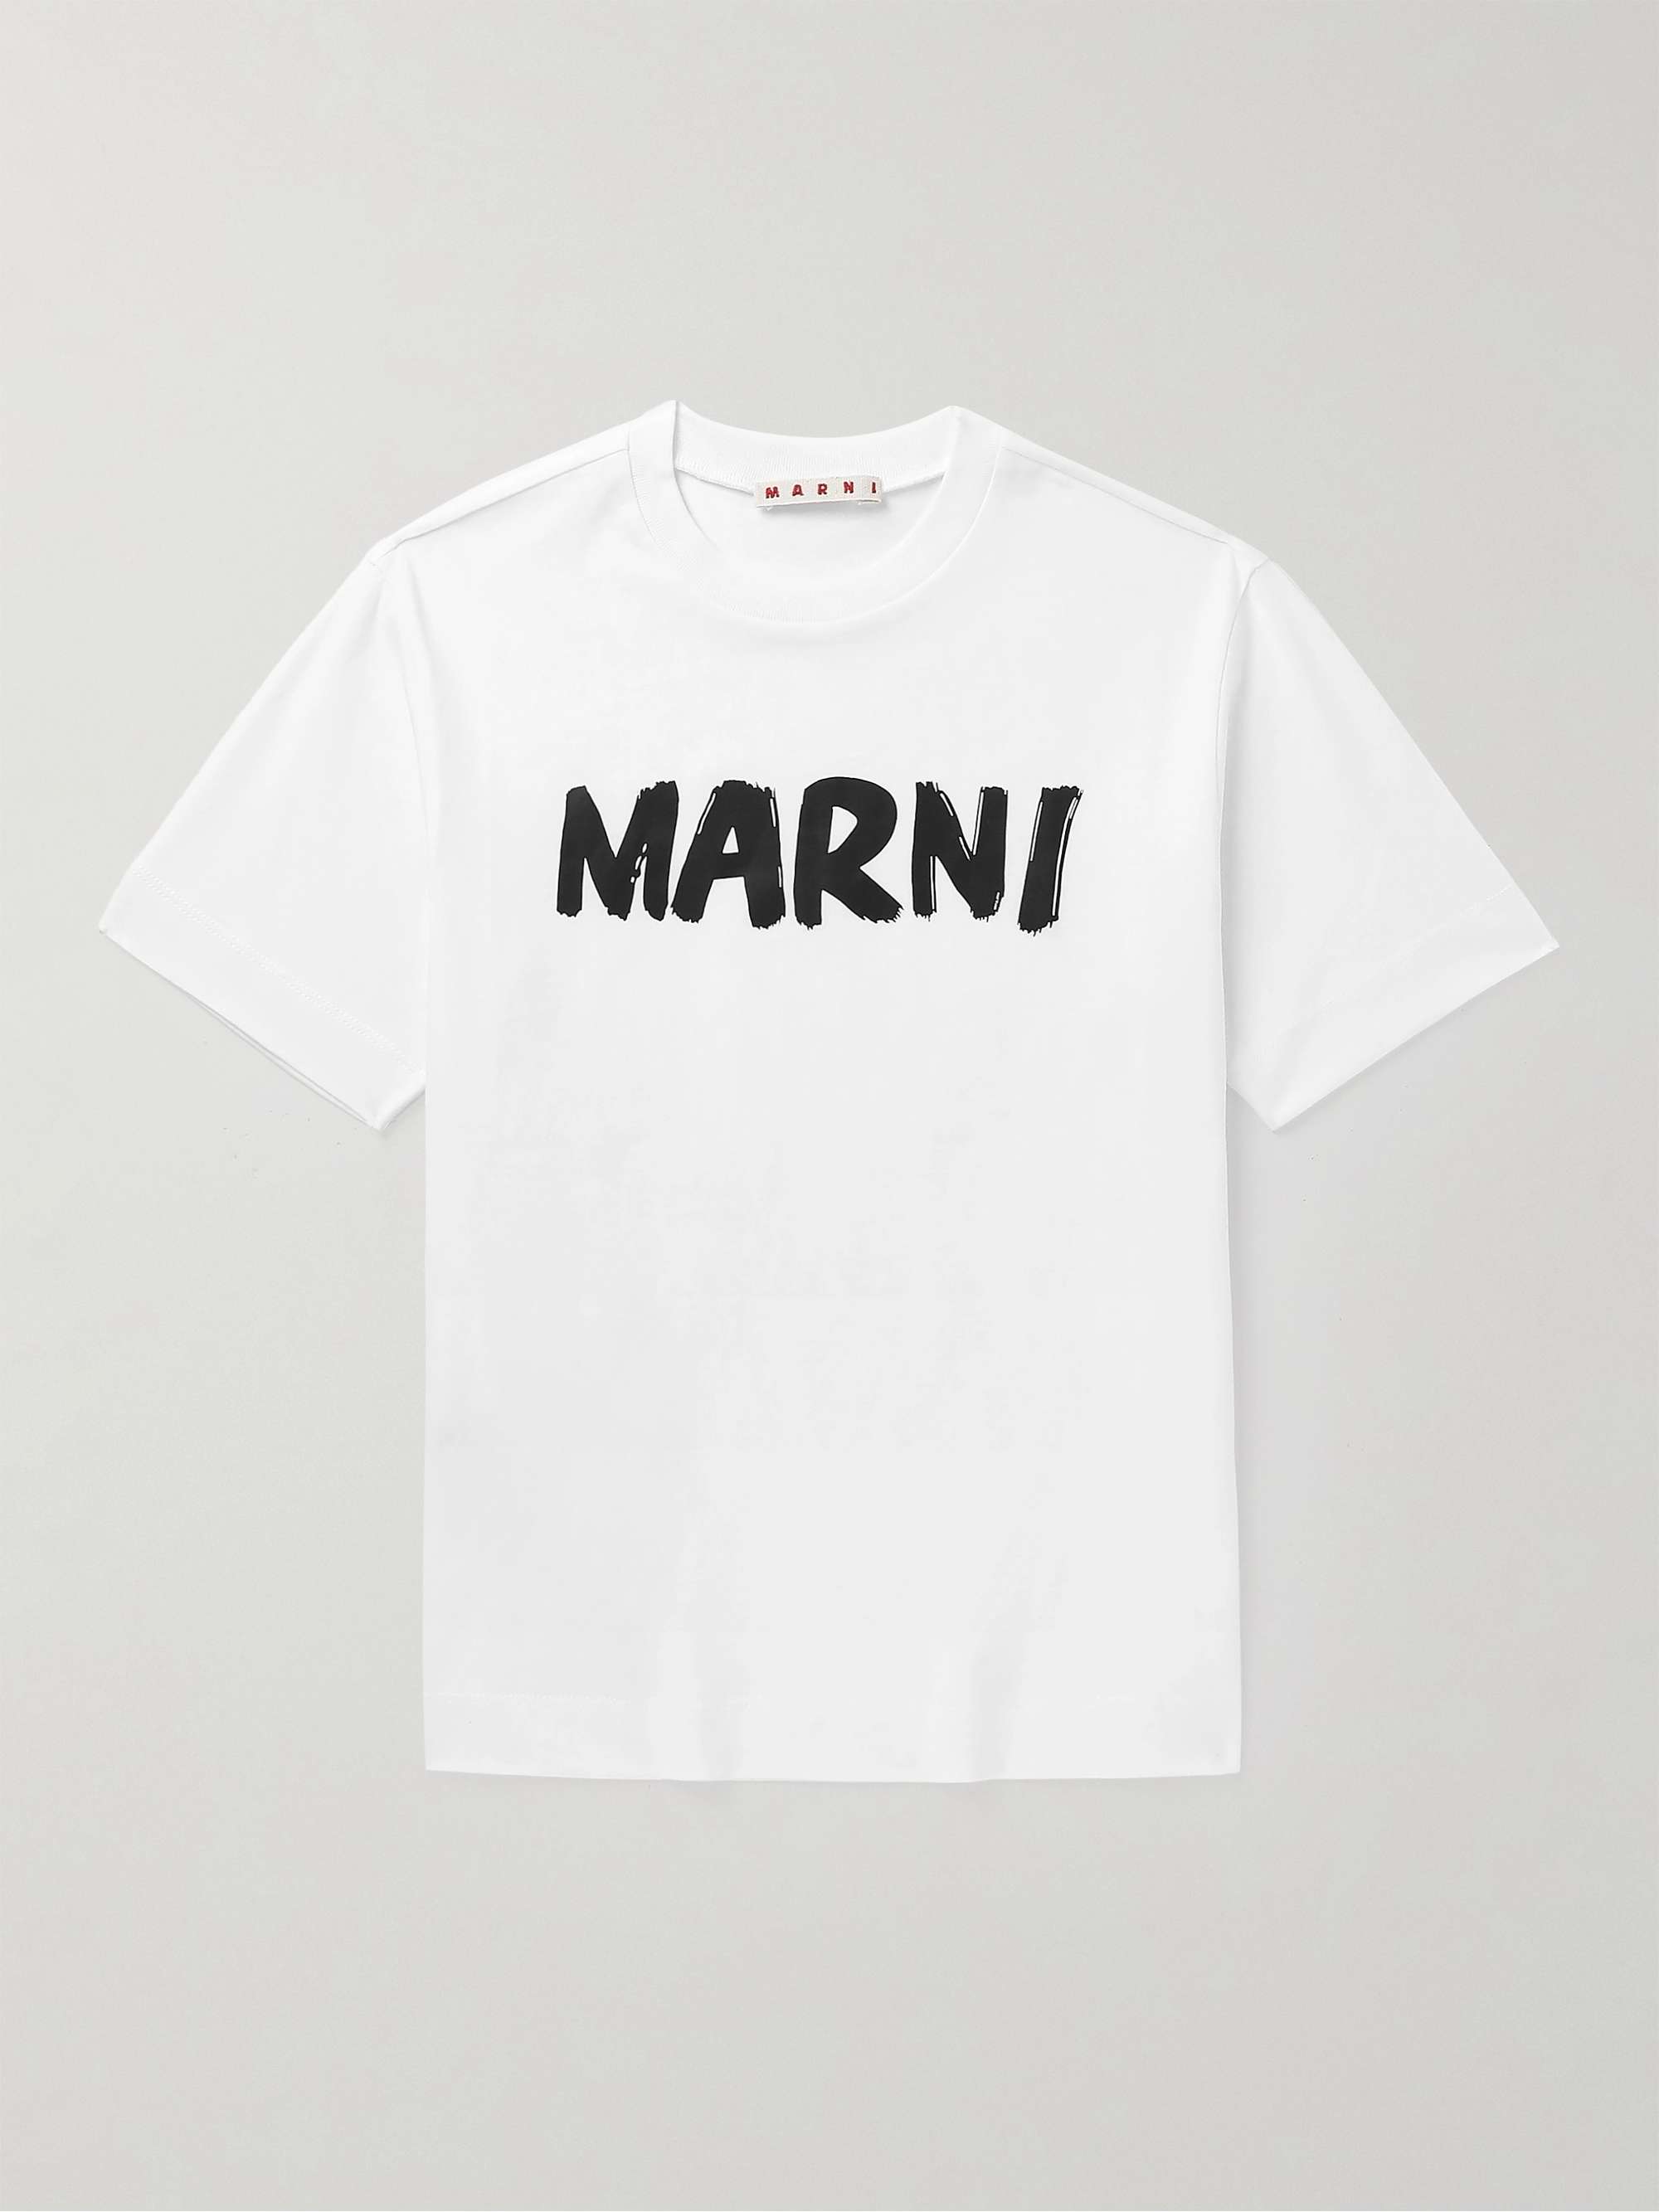 MARNI KIDS Logo-Print Cotton-Jersey T-Shirt | MR PORTER